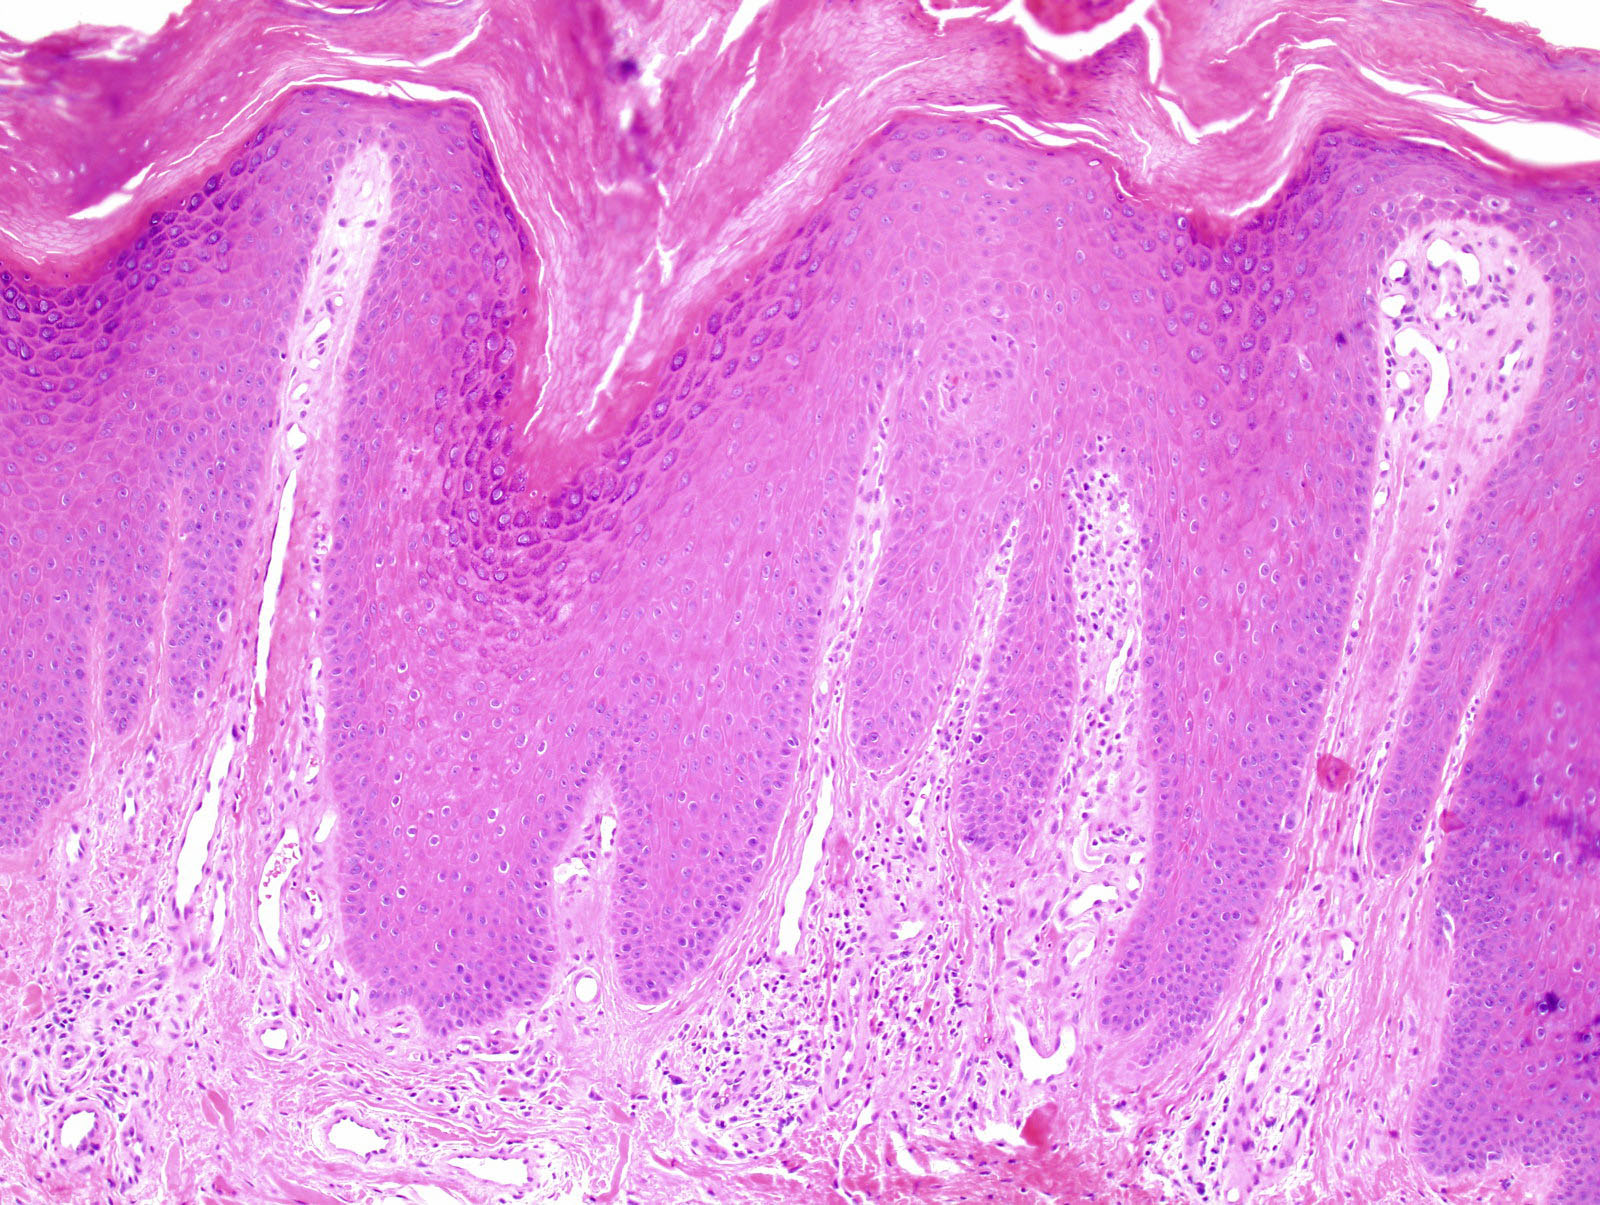 Vertically oriented dermal fibrosis